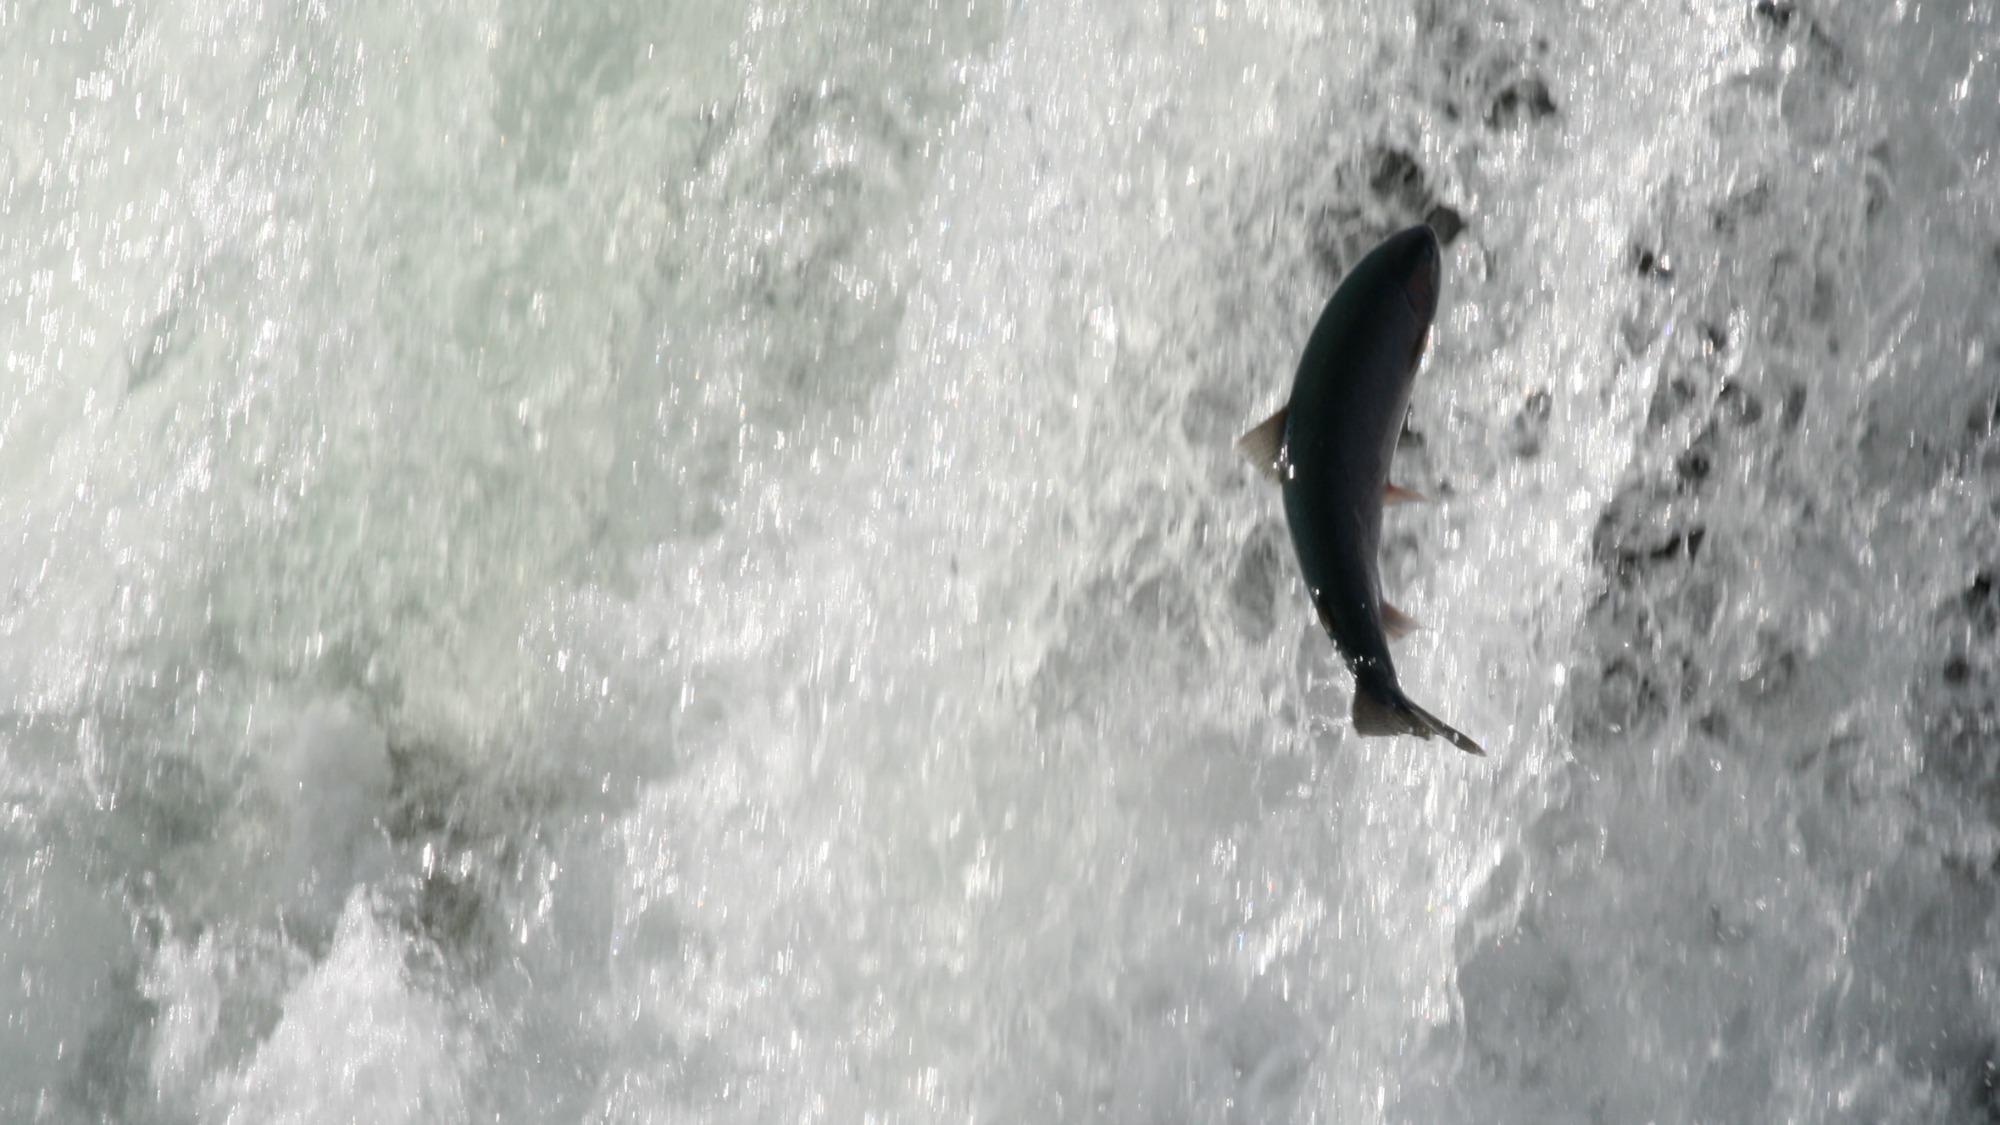 A salmon in Canada